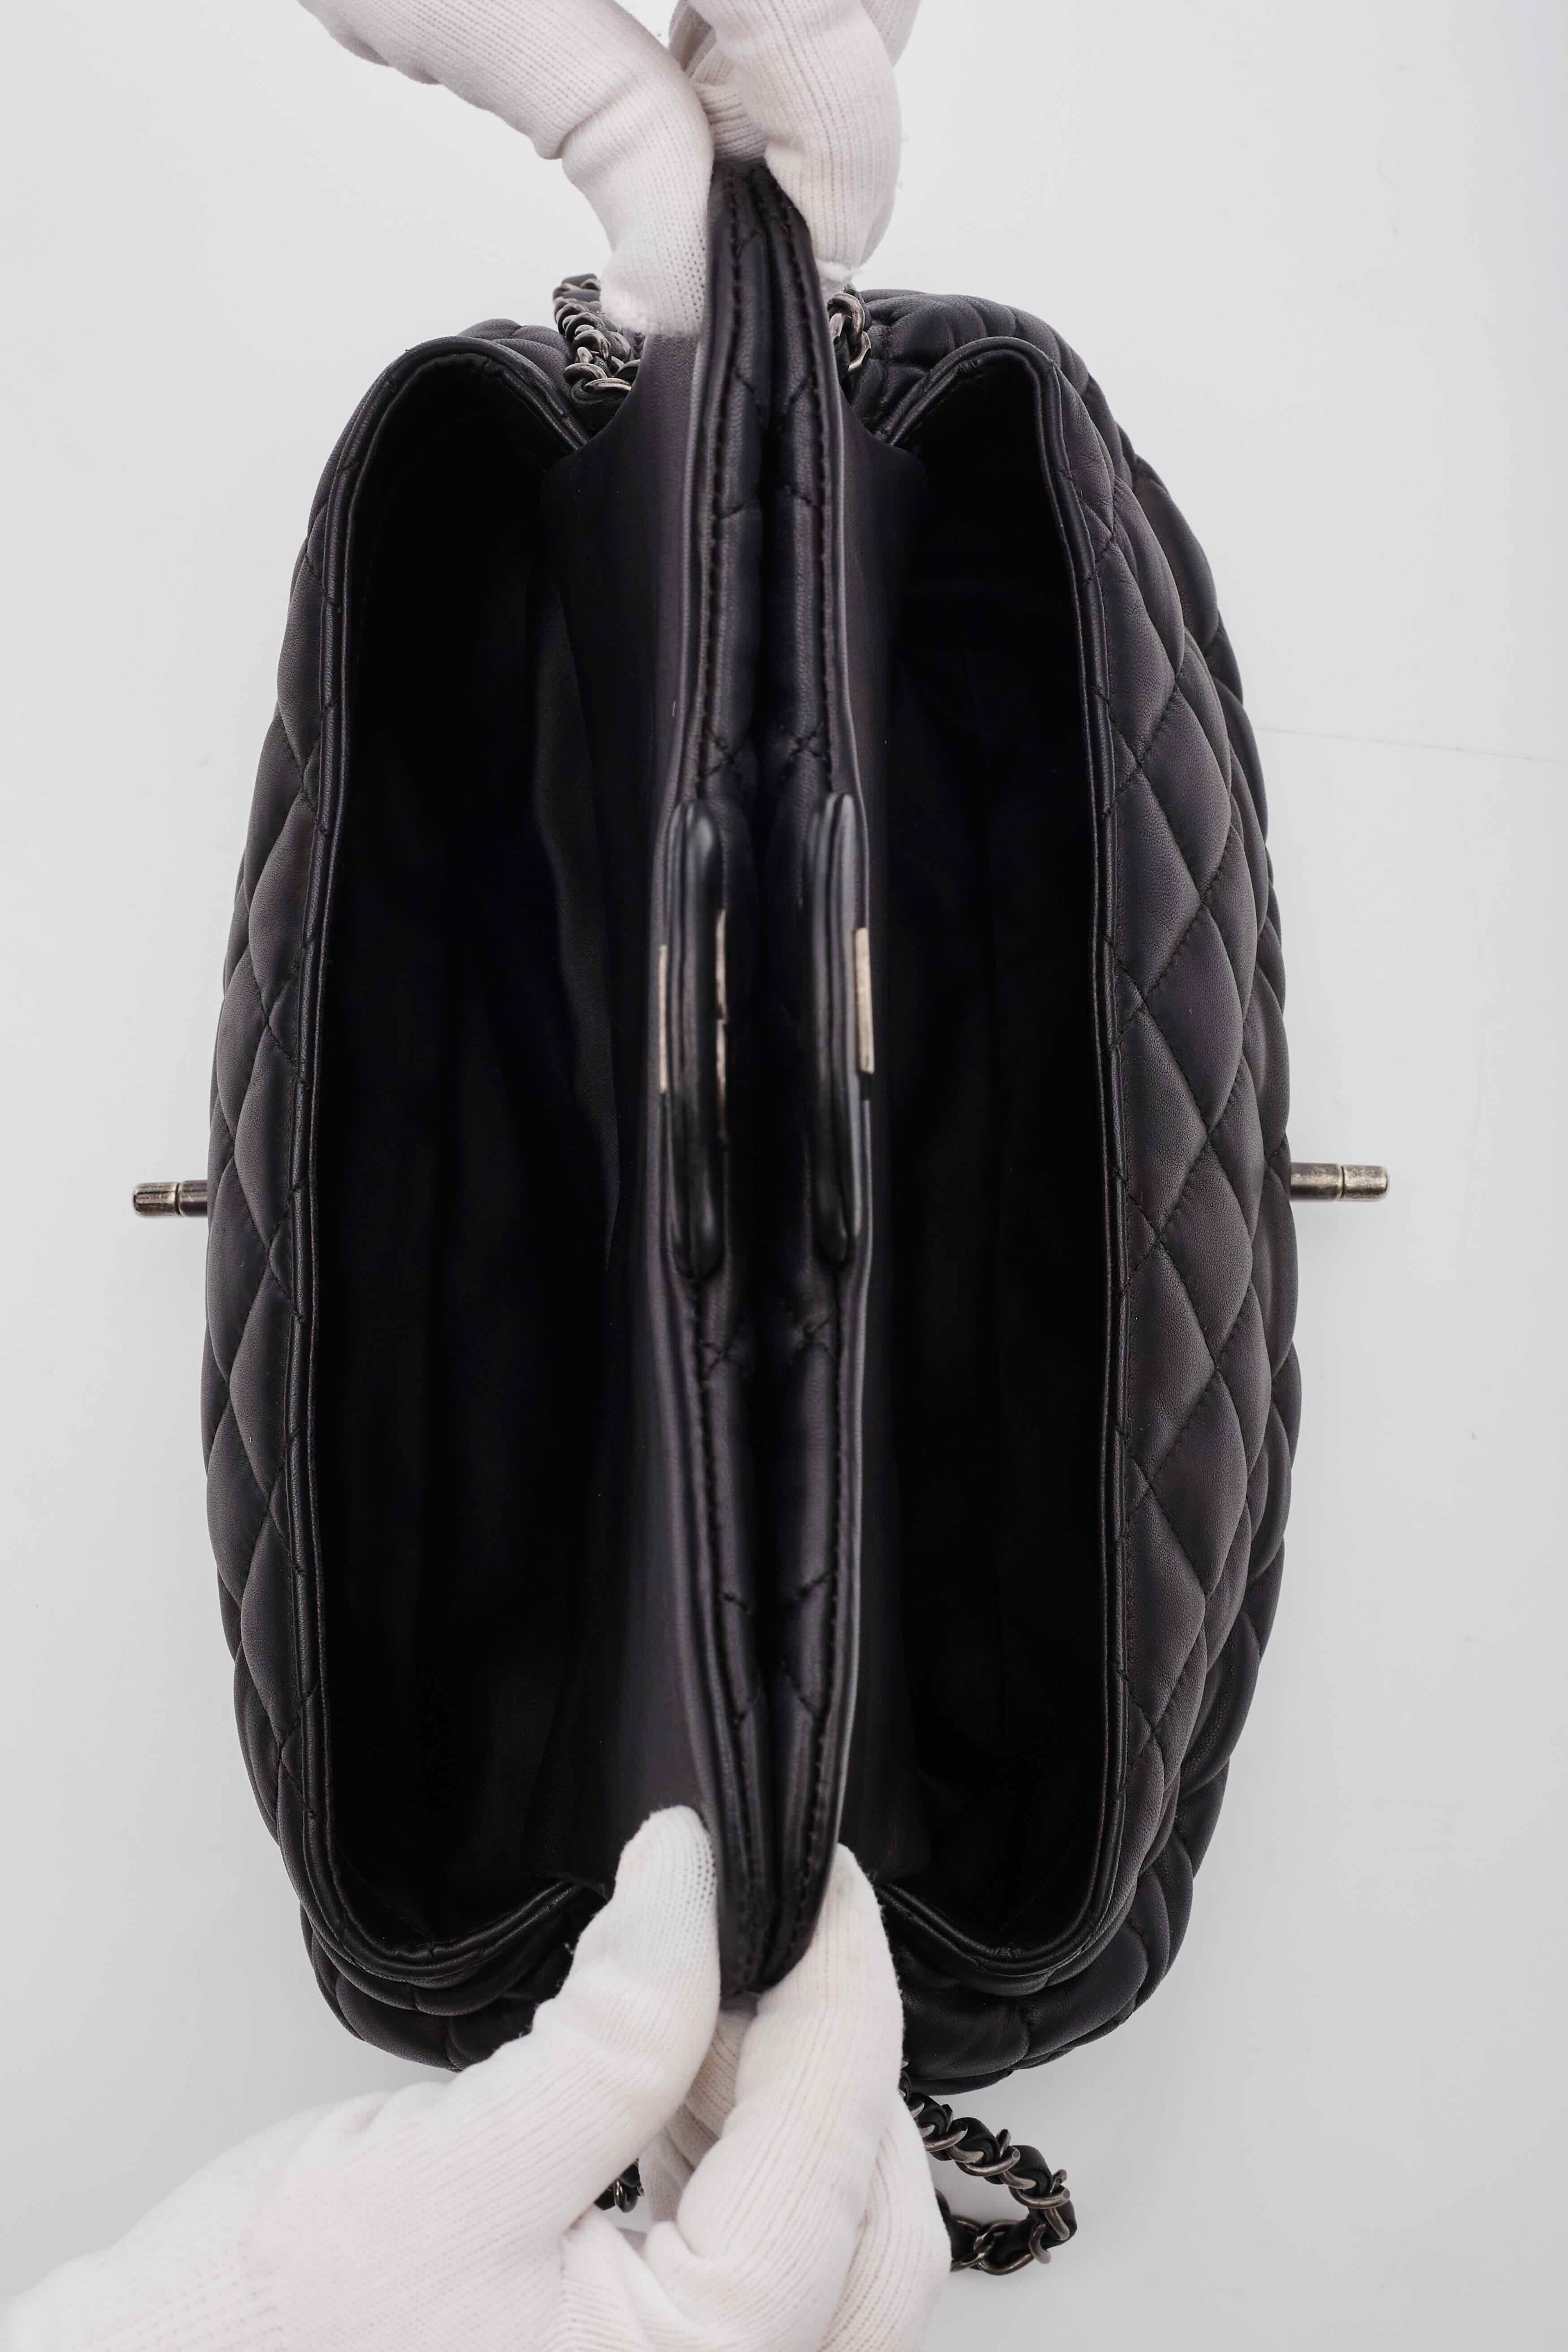 Chanel Black Lambskin Two Way Flap Shoulder Bag For Sale 2